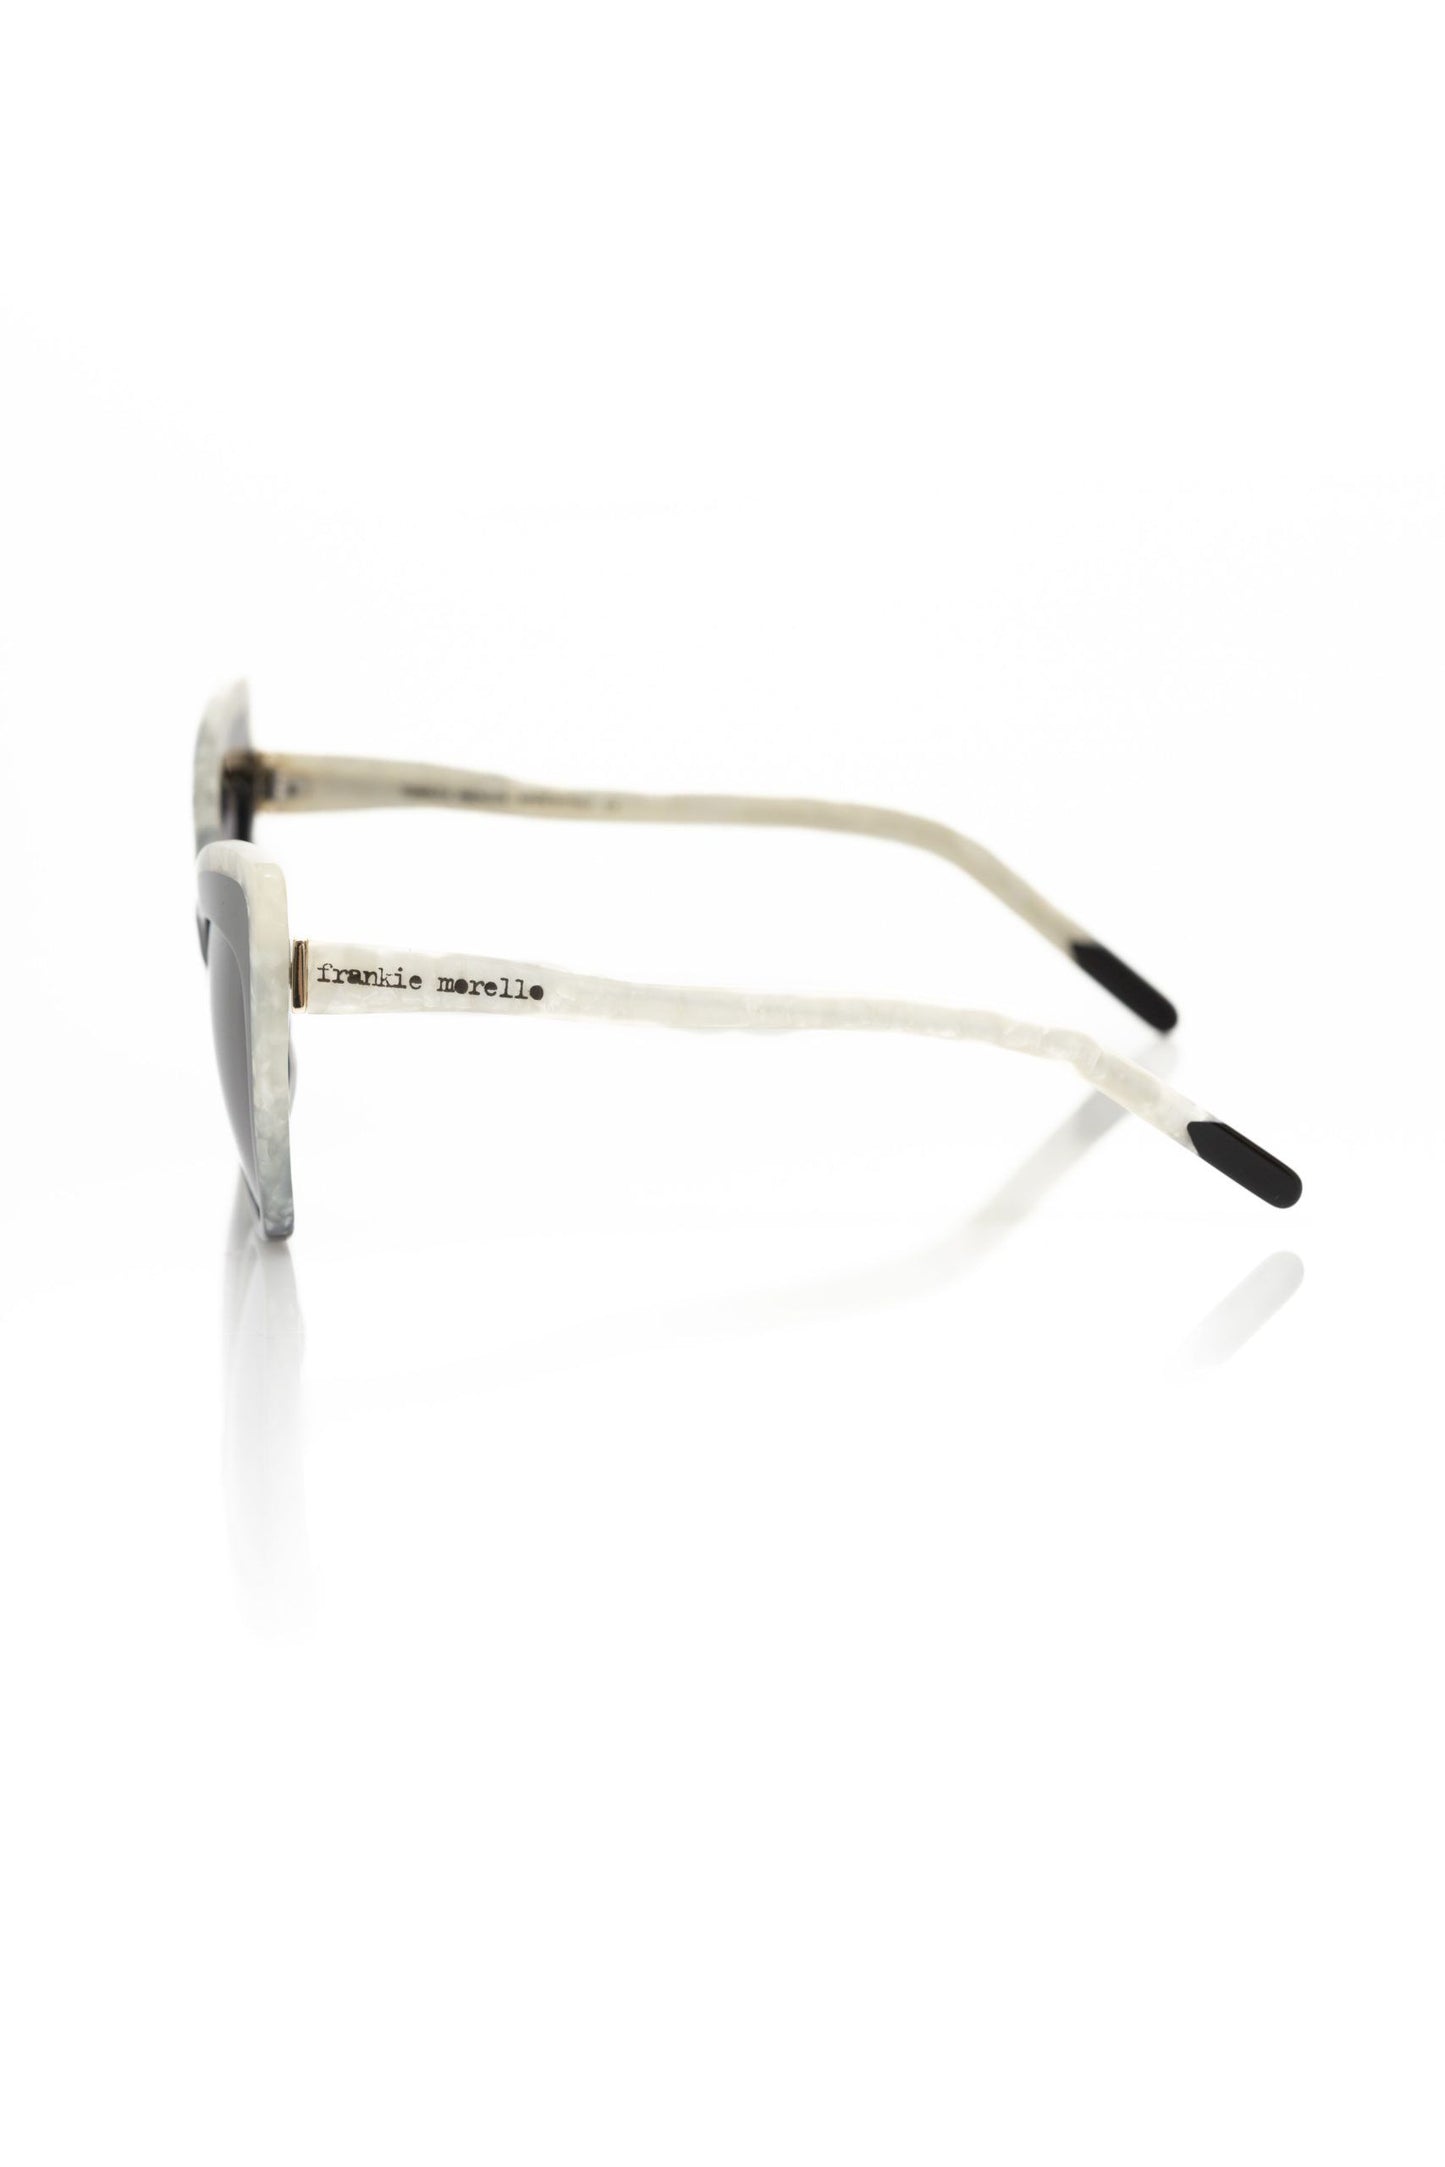 Frankie Morello FRMO-22076 Black Acetate Sunglasses